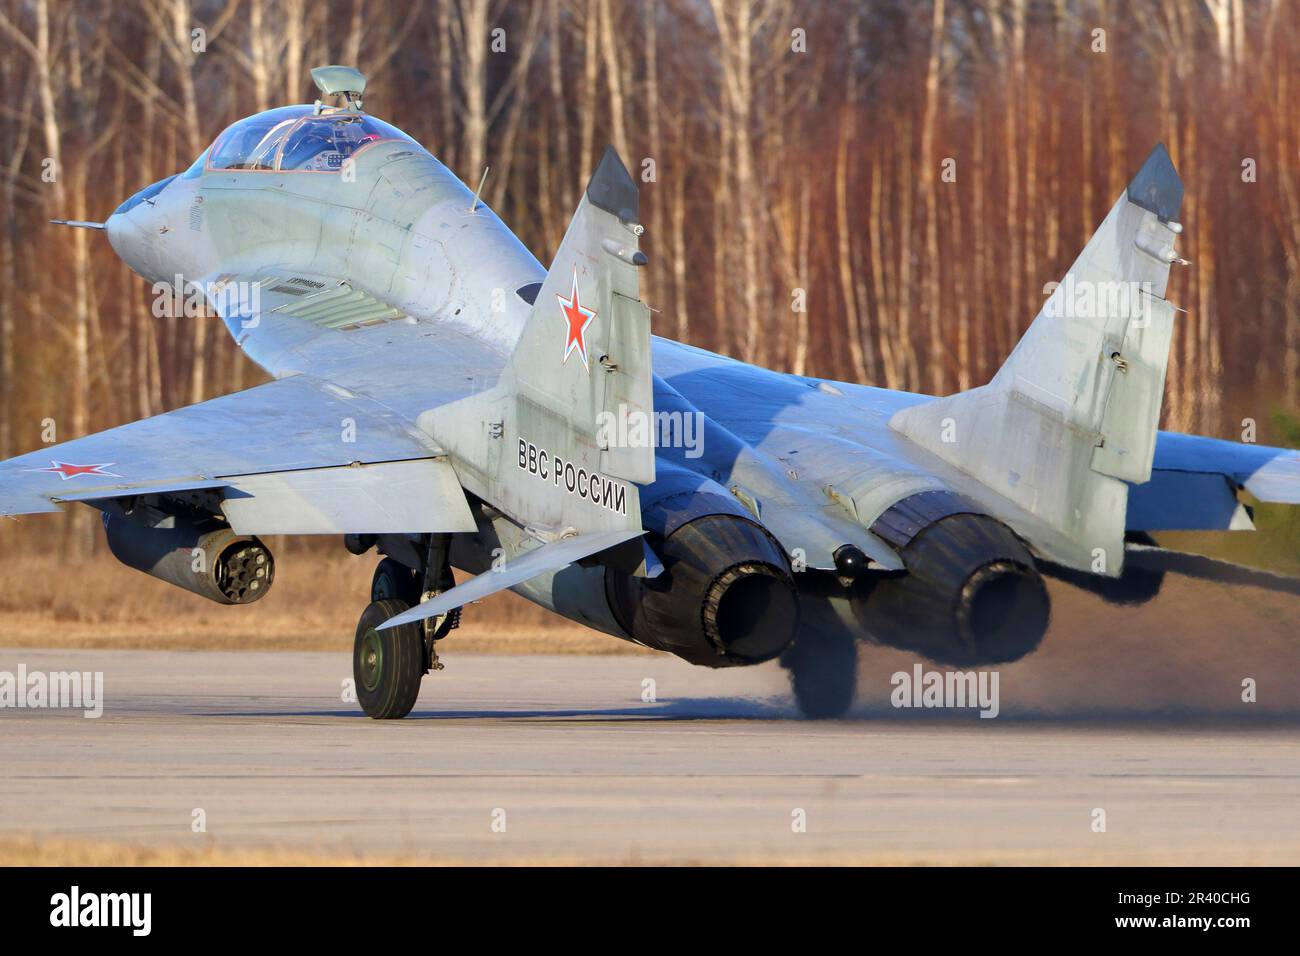 Un avion de chasse MIG-29UB de l'Armée de l'air russe qui a pris son envol, Kubinka, Russie. Banque D'Images